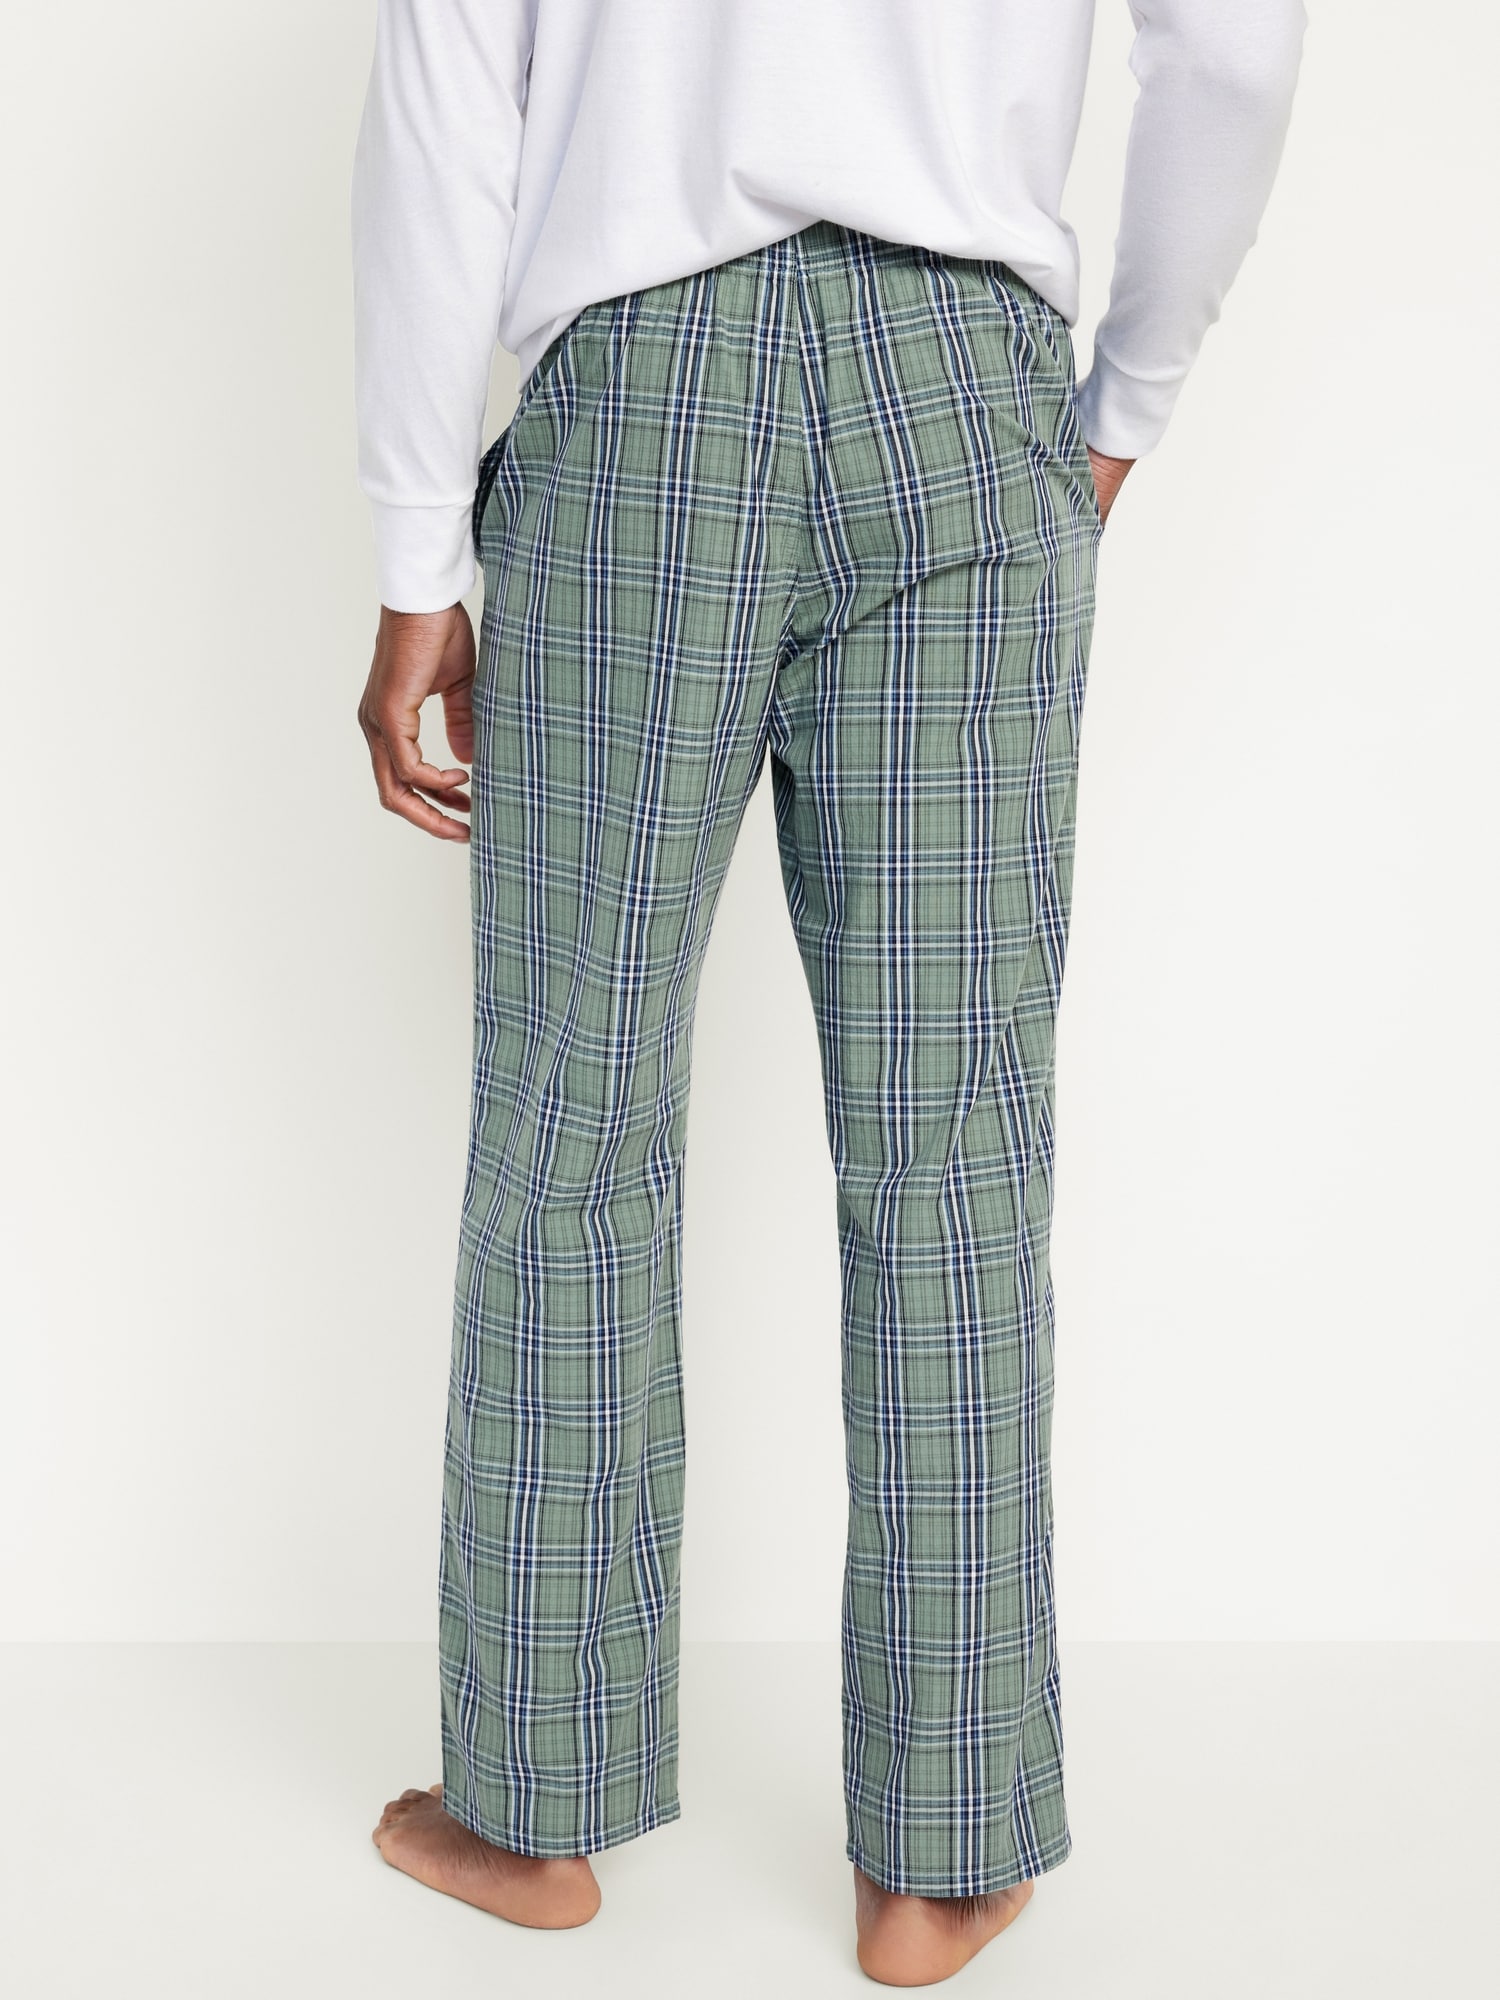 Adult Poplin Pajama Pants